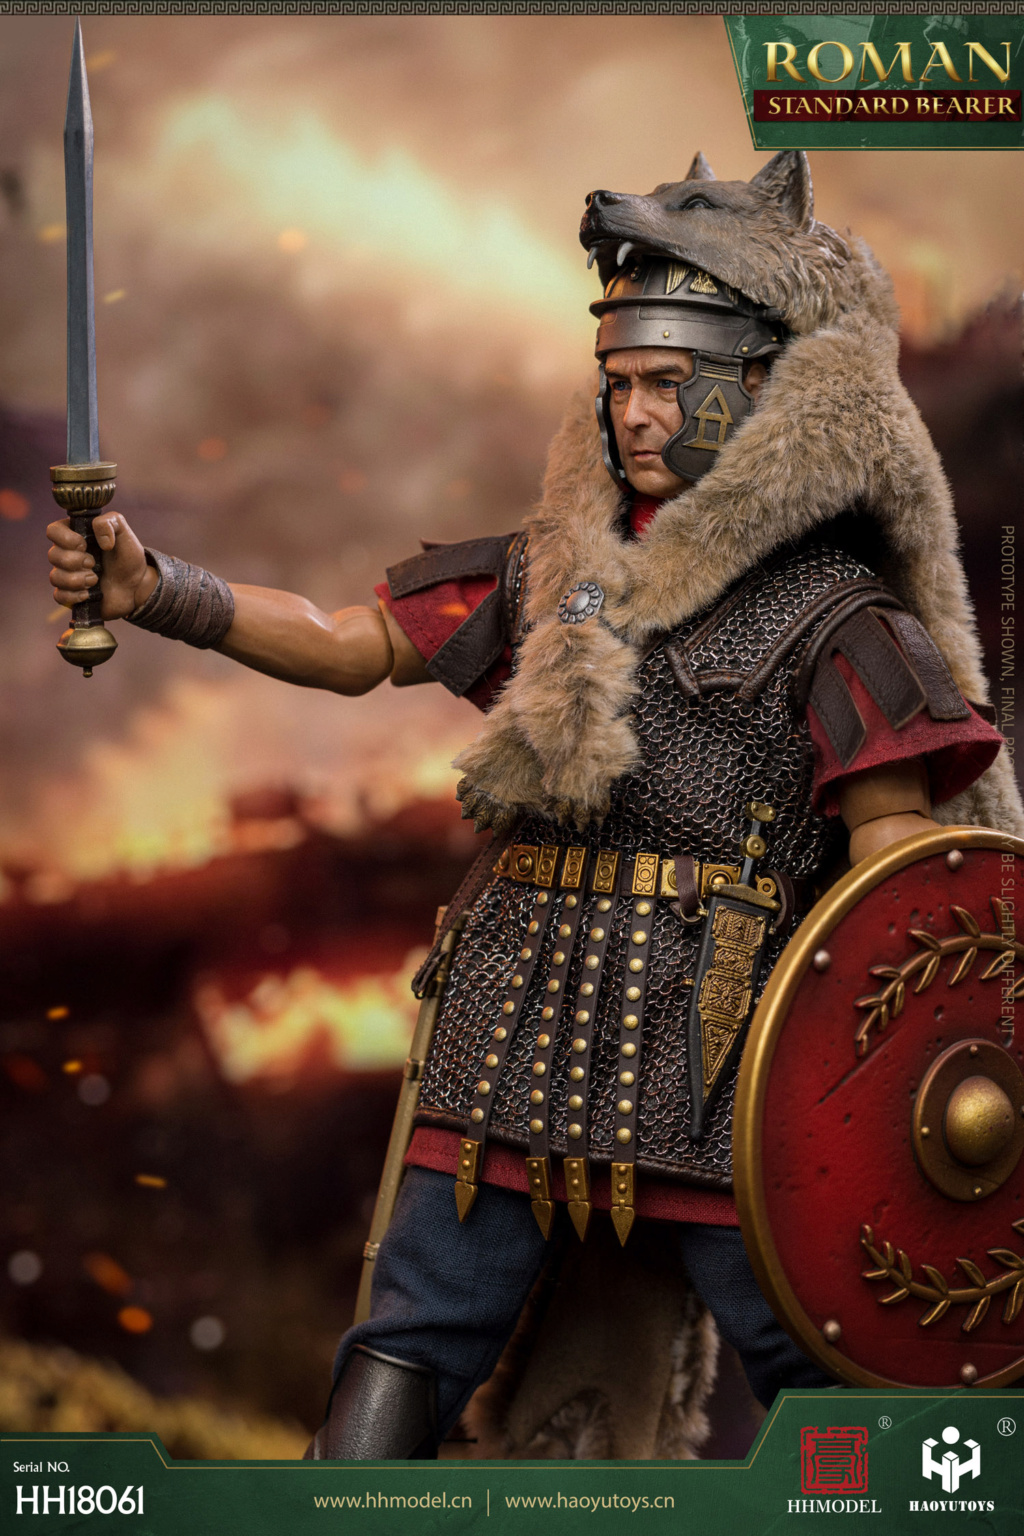 Historical - NEW PRODUCT: HHModel & HaoYuToys: 1/6 Empire Legion - Roman Standard Bearer Action Figure #HH18061 15035910